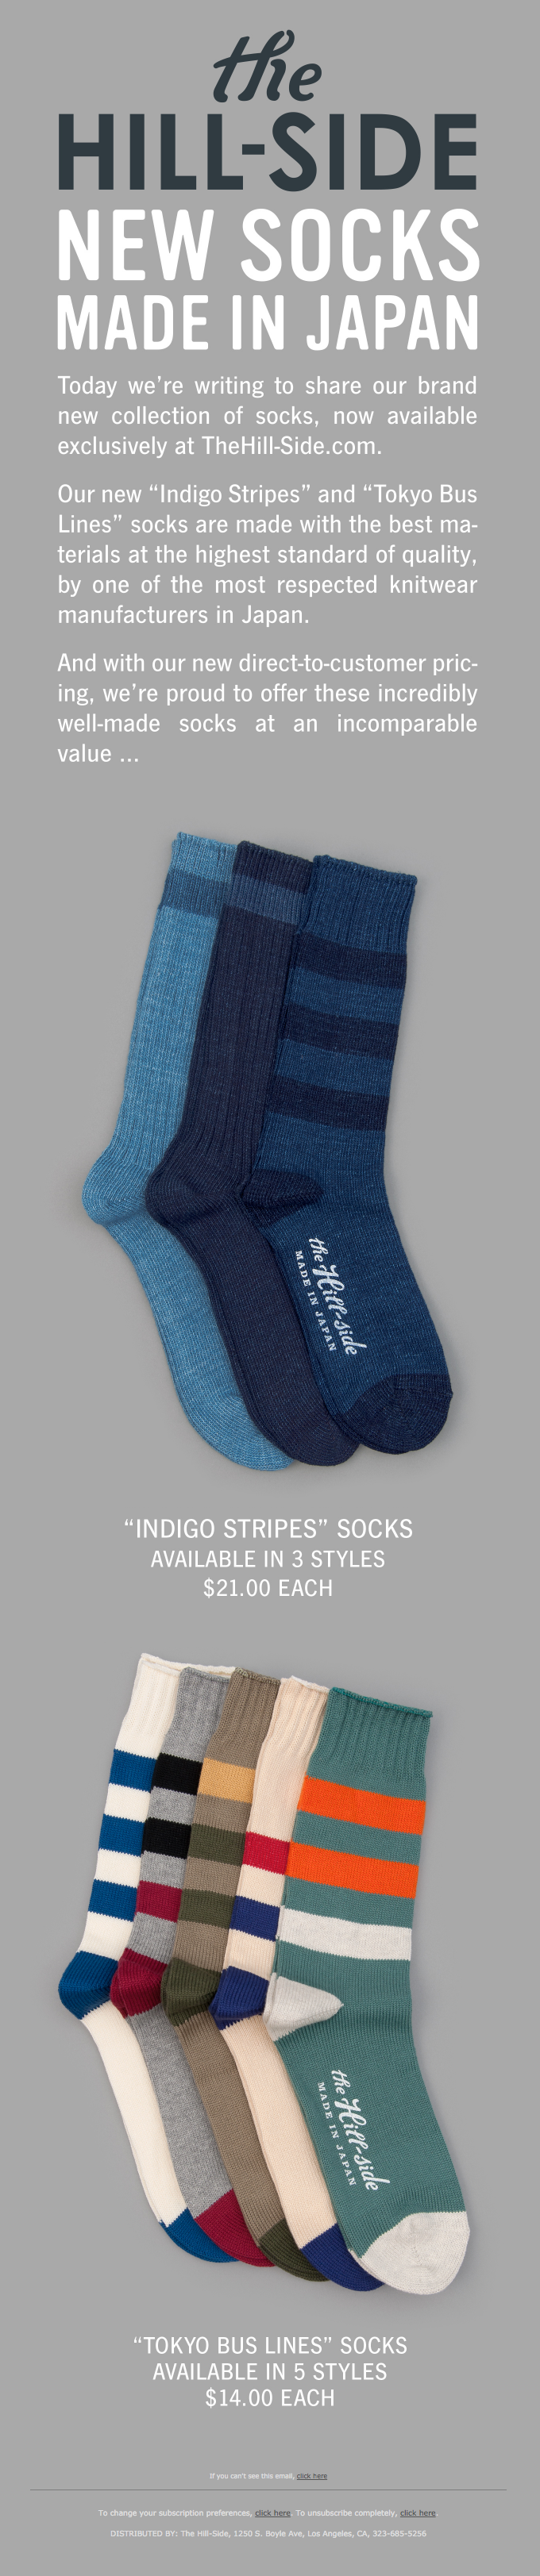 All-New Socks, Made in Japan